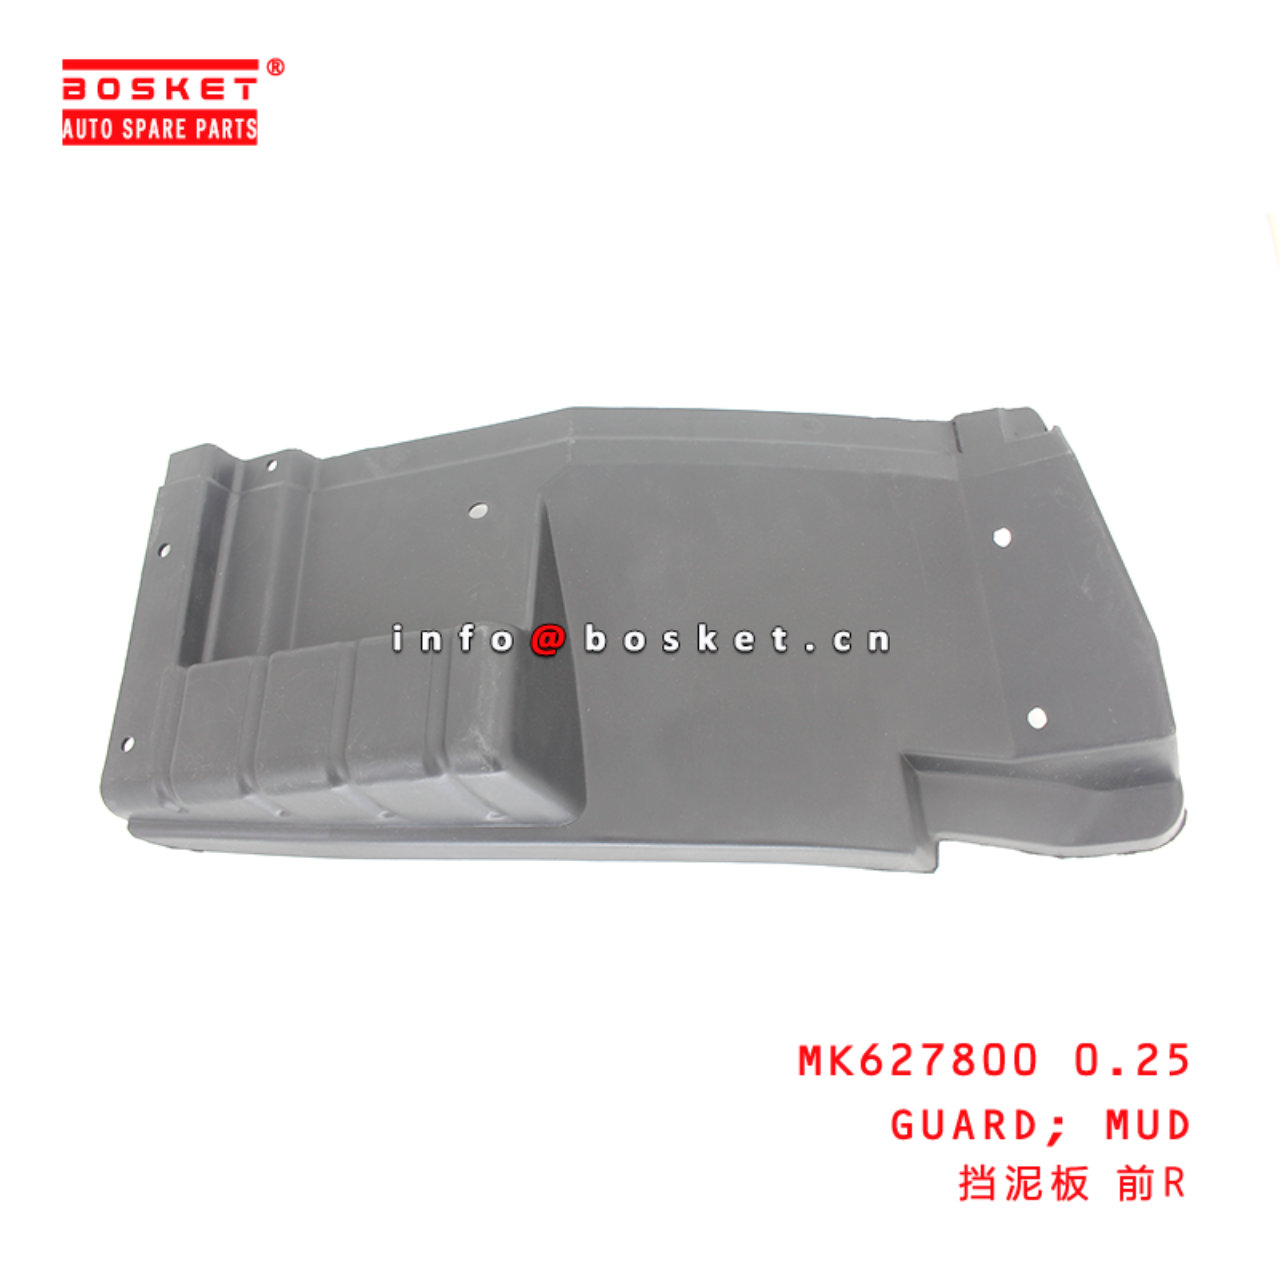 MK627800 0.25 Mud Guard Suitable for ISUZU HINO300